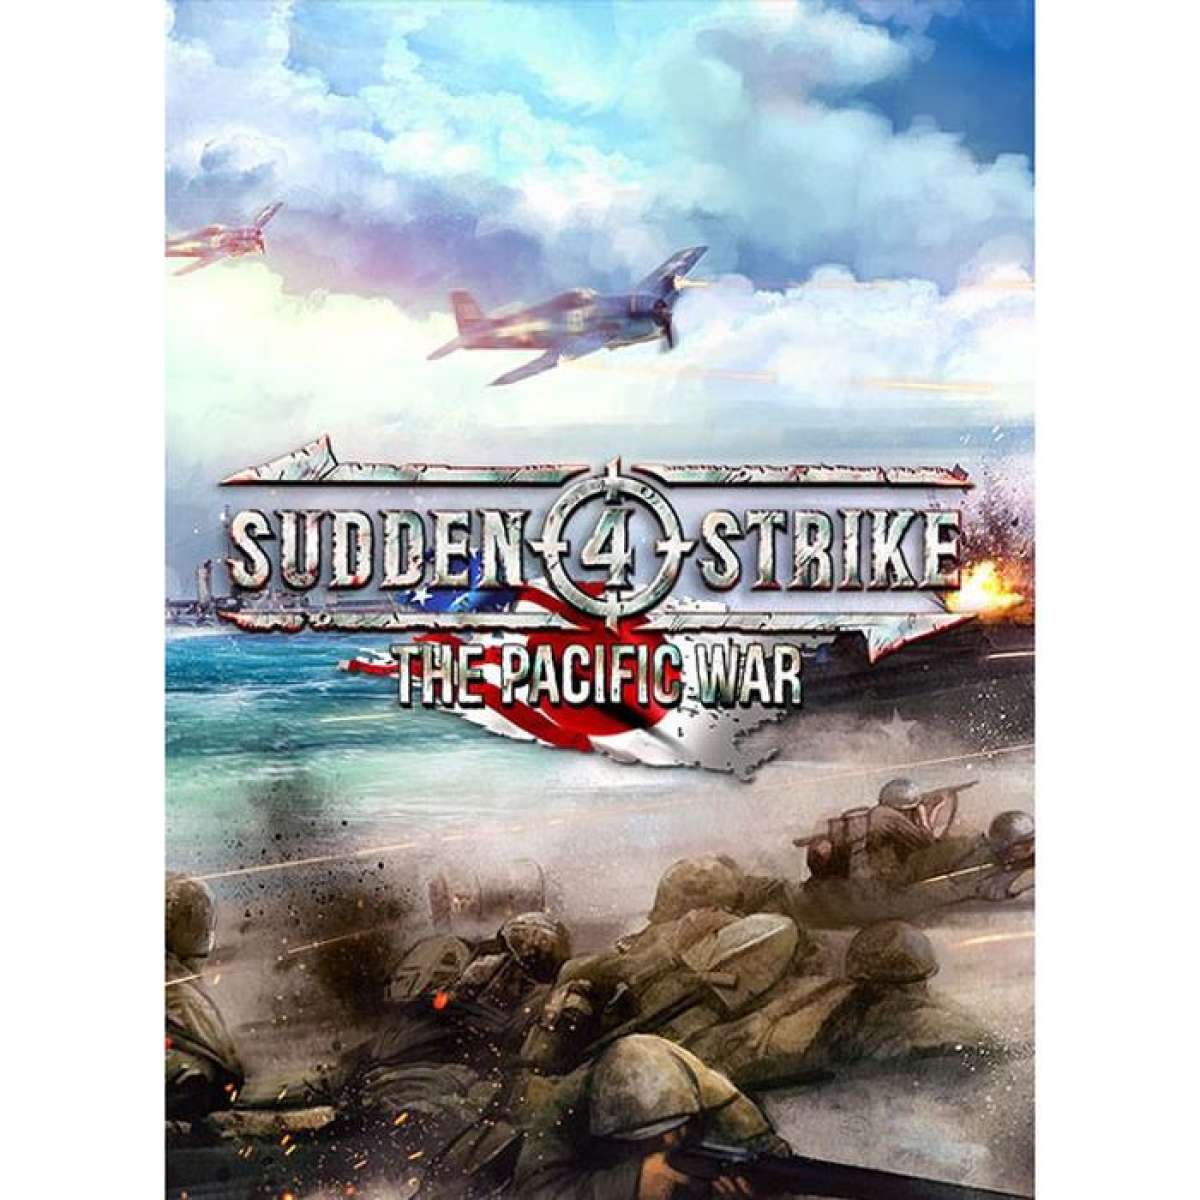 Sudden strike steam фото 85